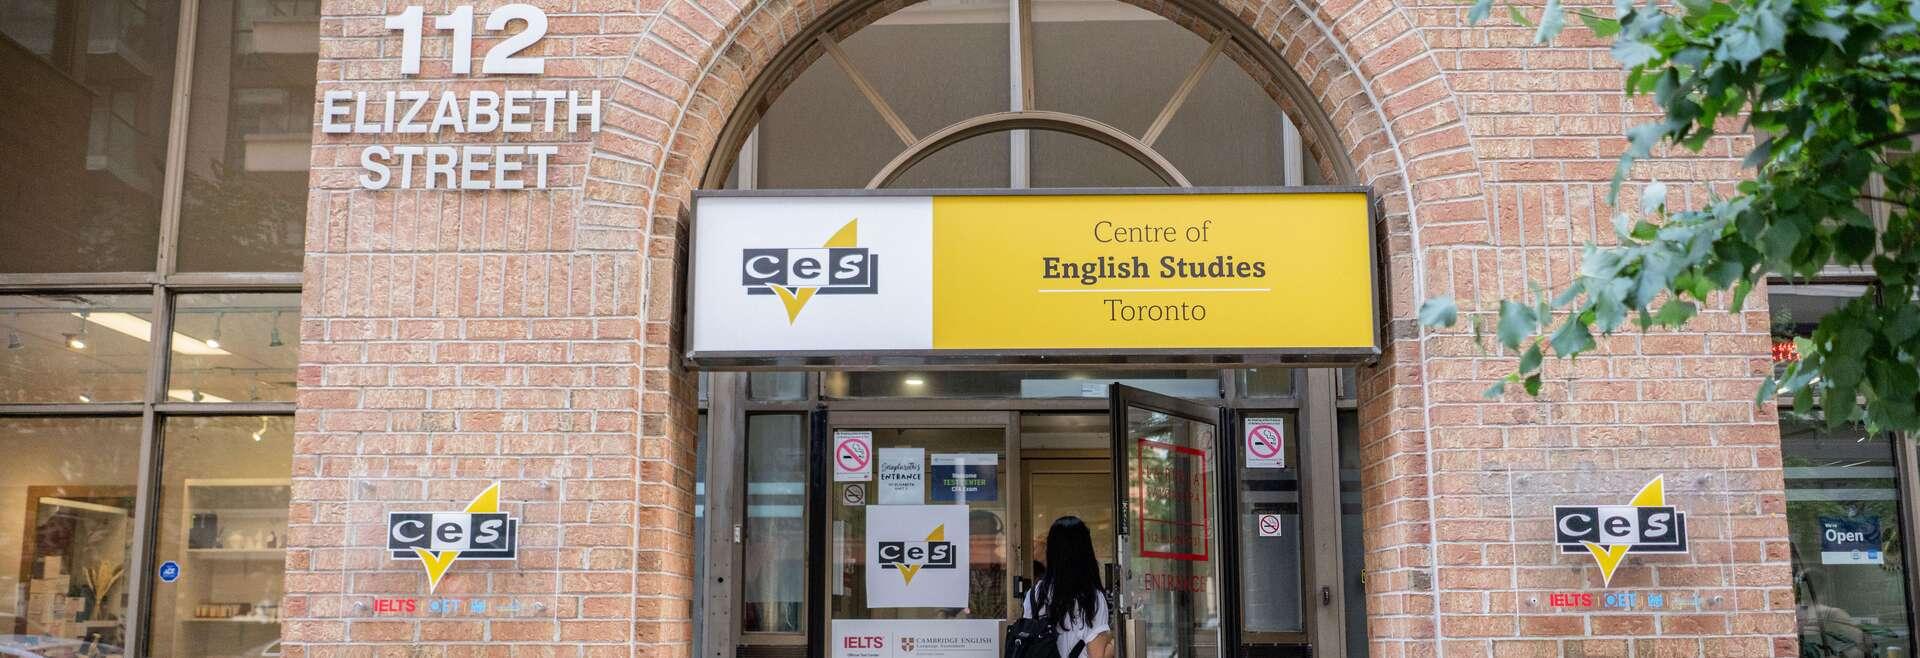 Séjour linguistique Canada, Toronto - CES Toronto - Ecole - Entrée